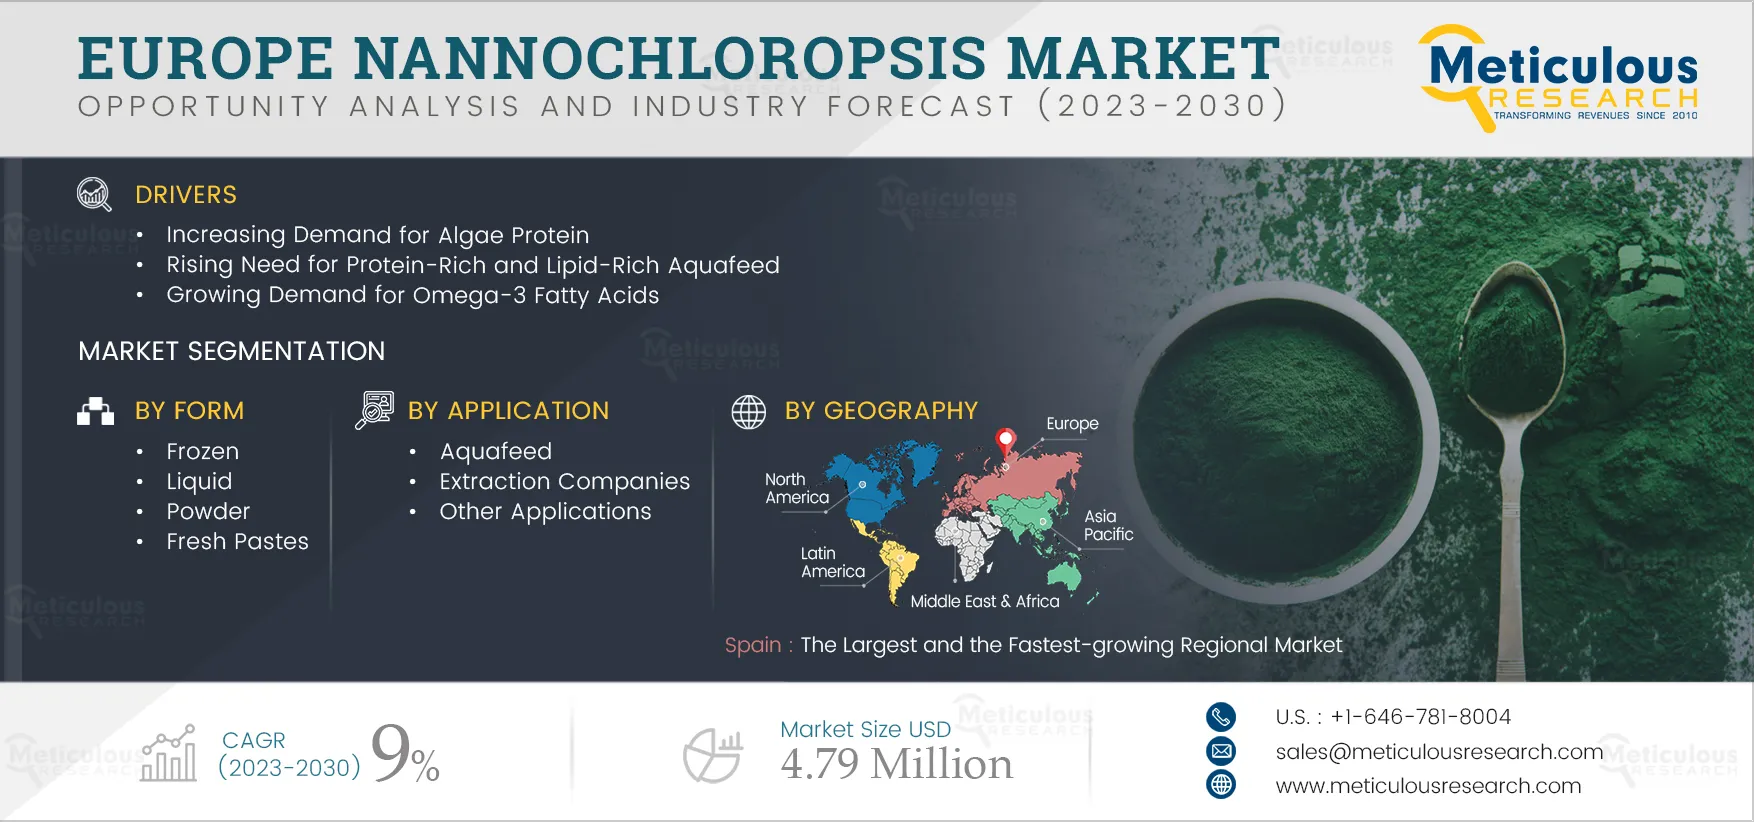 Europe Nannochloropsis Market